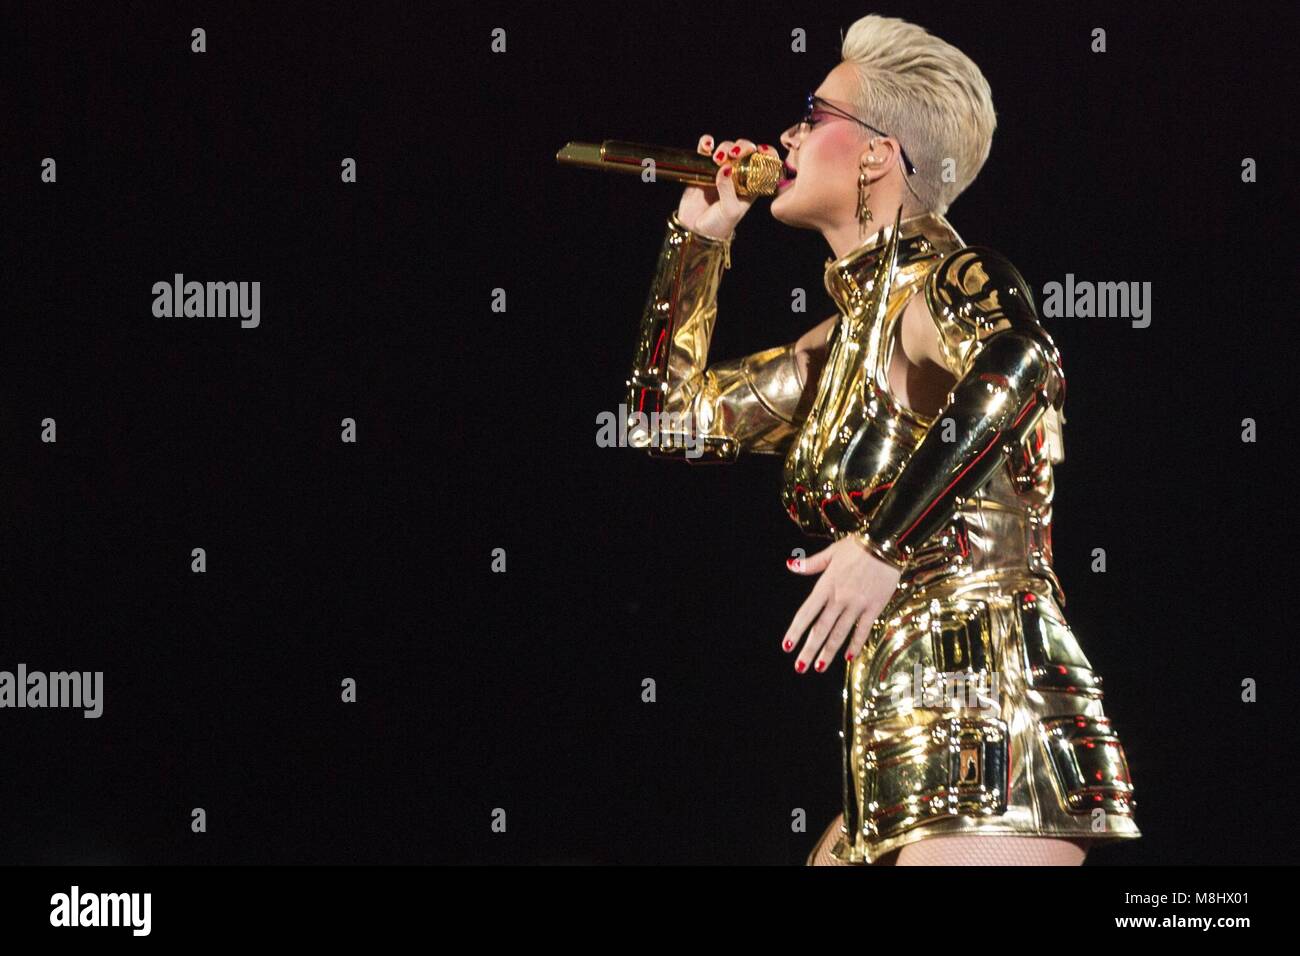 SÃO PAULO, BRAZIL - MARCH 17: Katy Perry performs during the Witness The Tour show at Allianz Park. March 17, 2018 in São Paulo, Brazil Credit: Adriana Spaca/Alamy Live News Stock Photo